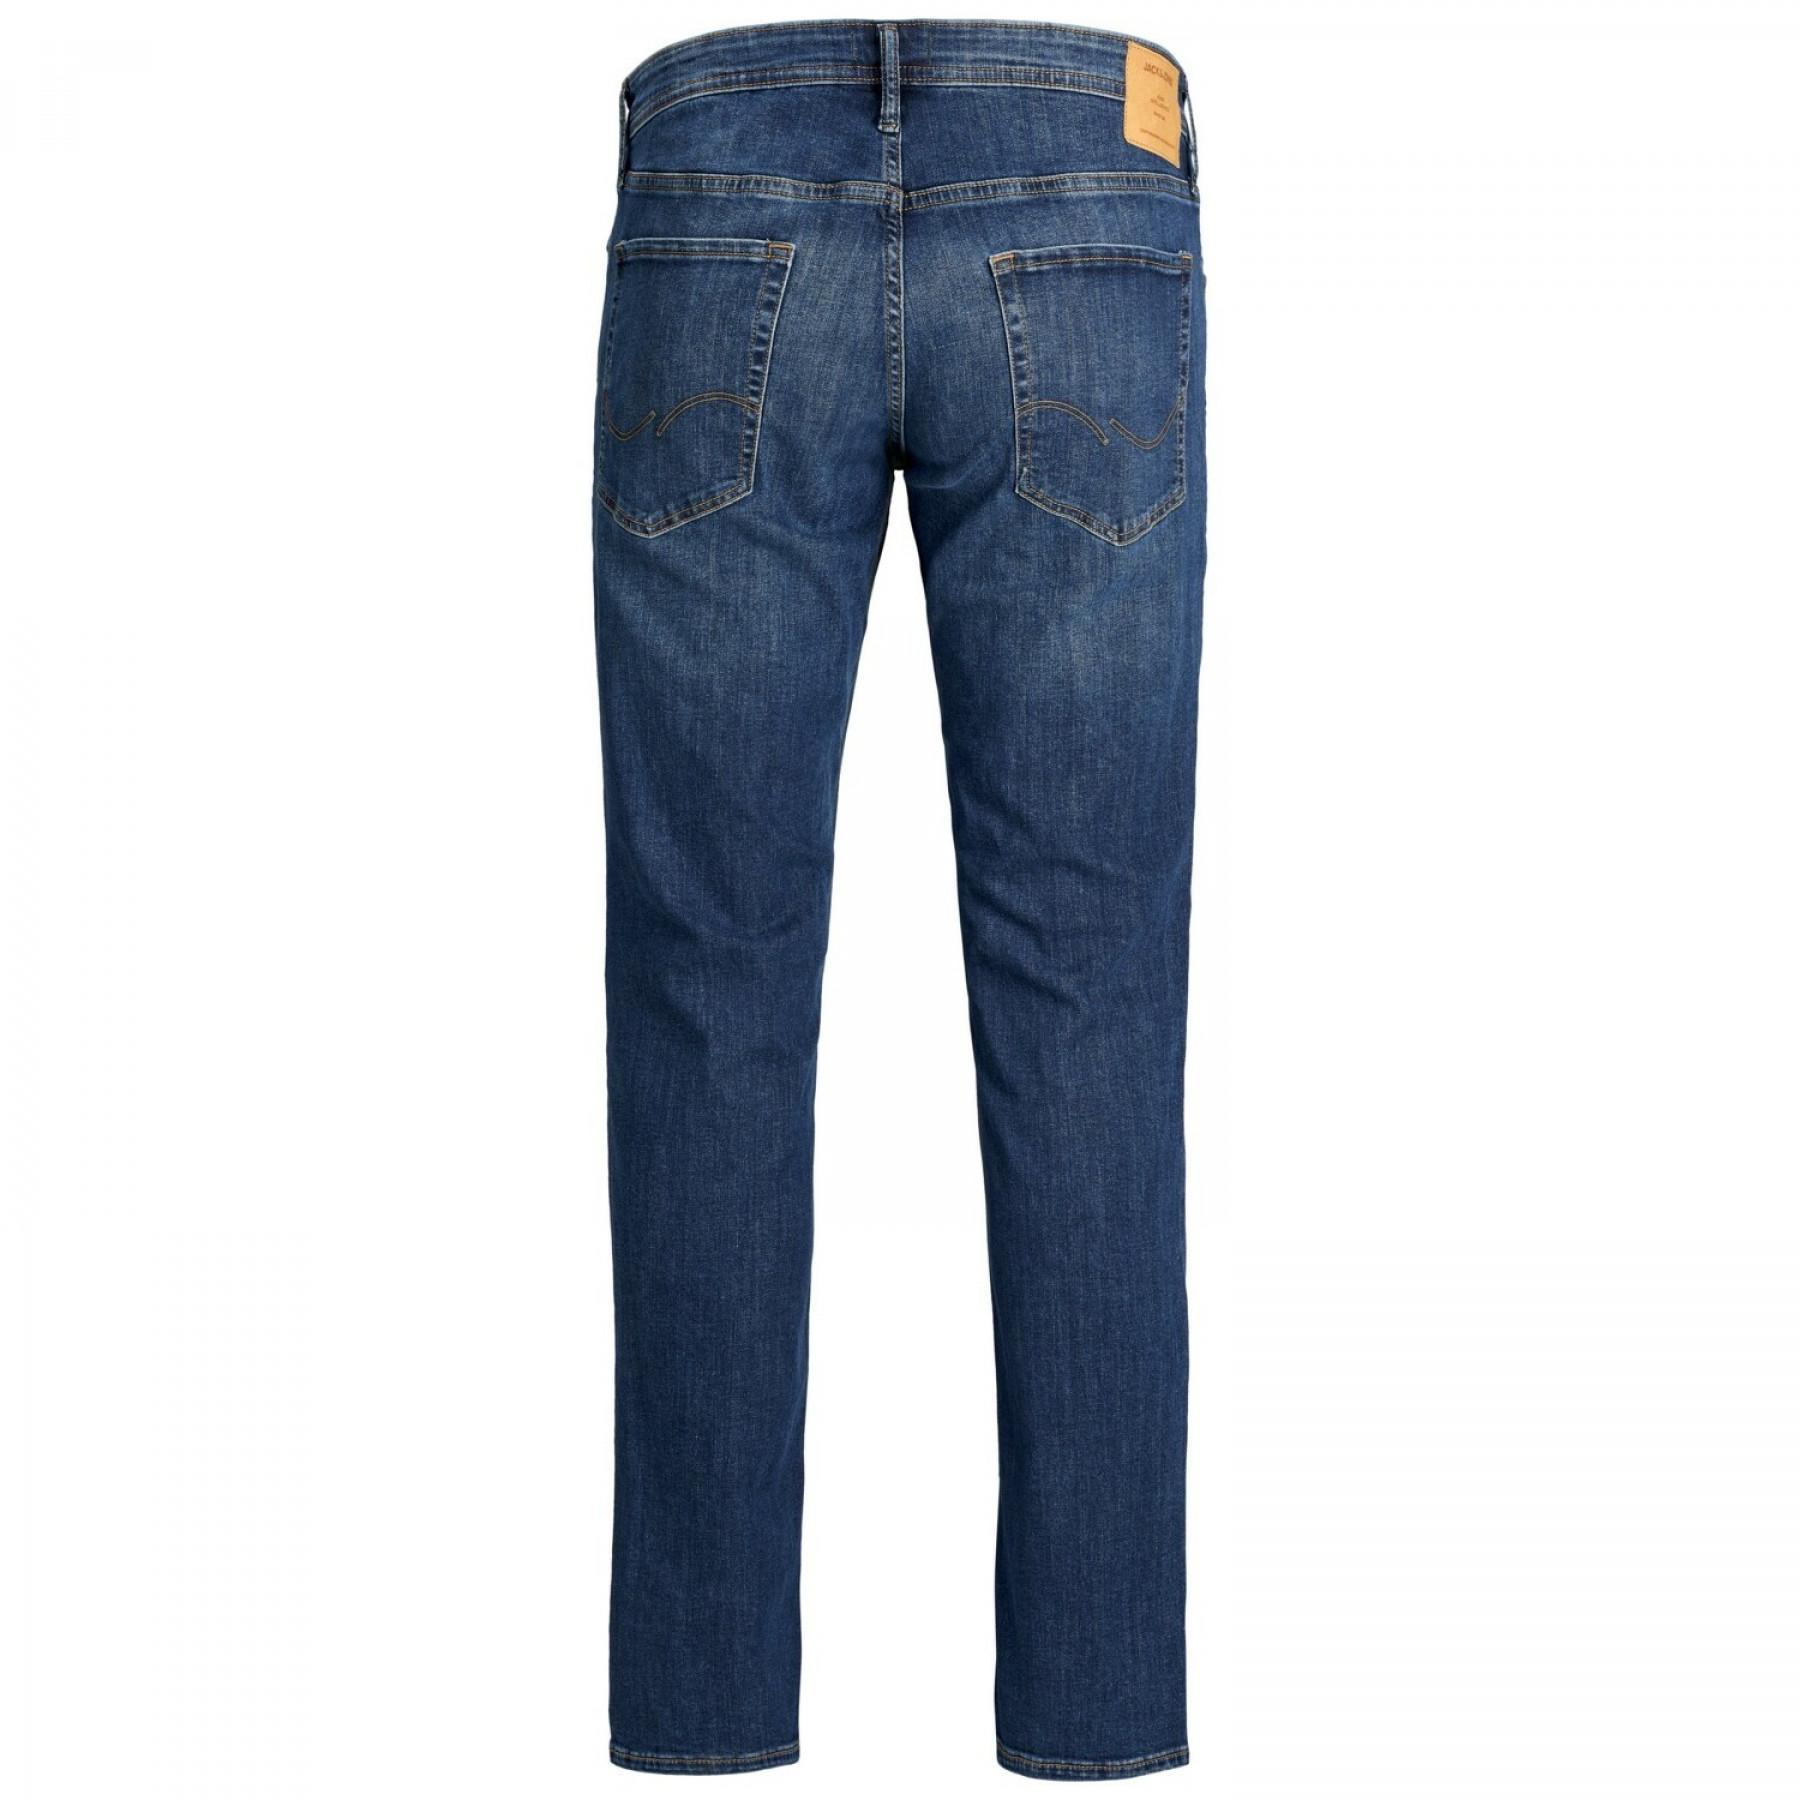 Jeans in großen Größen Jack & Jones Tim Original 814